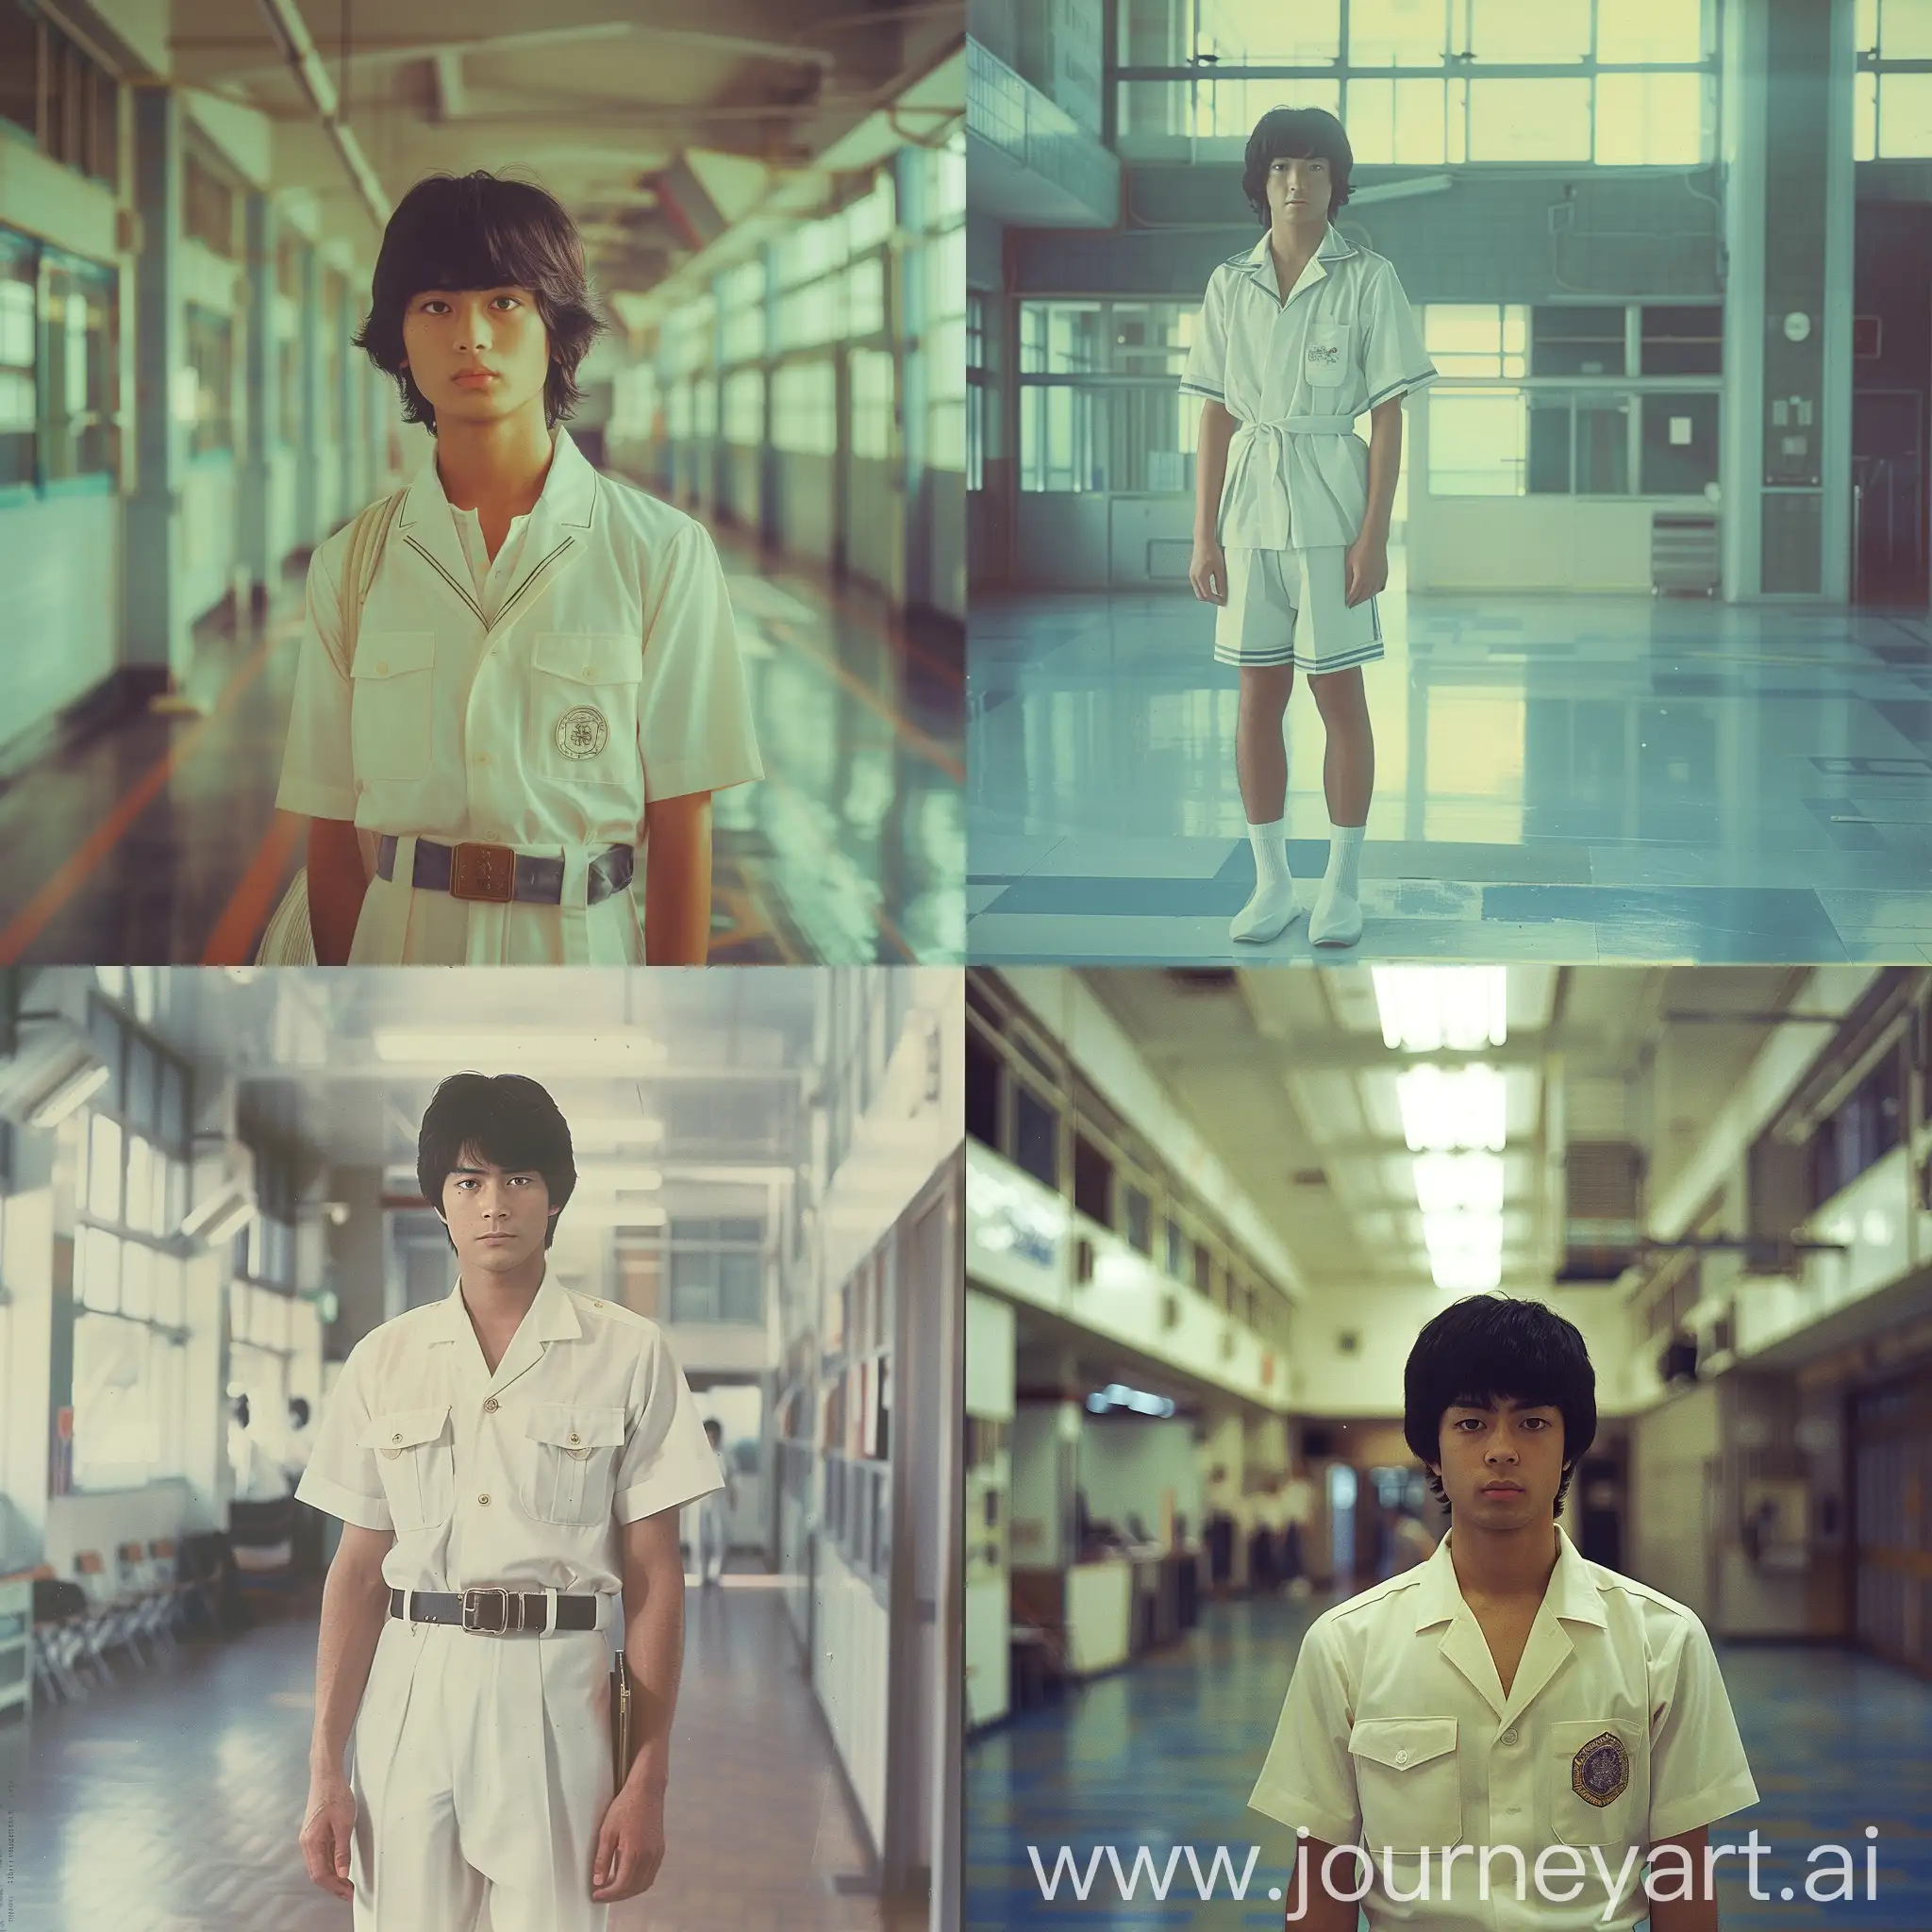 Japanese-Schoolboy-in-Retro-Anime-Style-Uniform-at-School